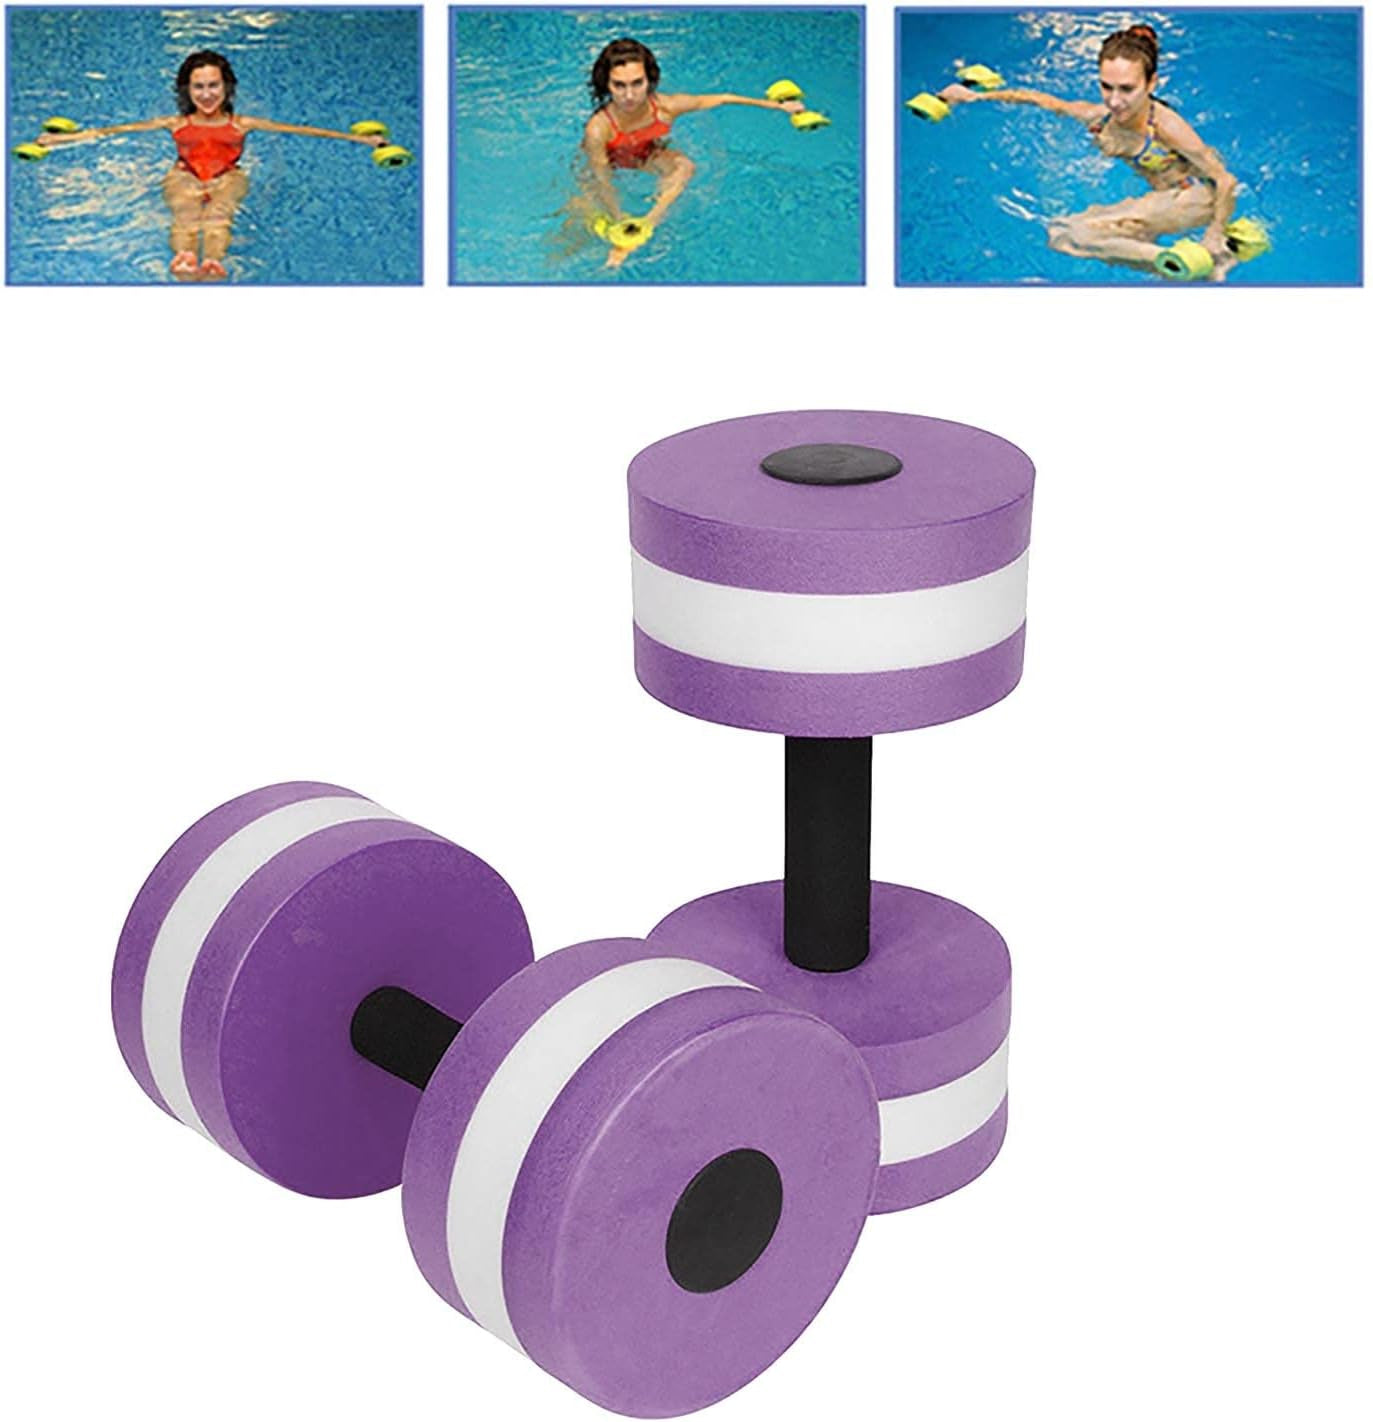 Aquatic Dumbbell Set, 2PCS Water Dumbells Pool Resistance Water Fitness Equipment Foam Dumbbell Water Aerobics Fitness Equipment for Weight Loss